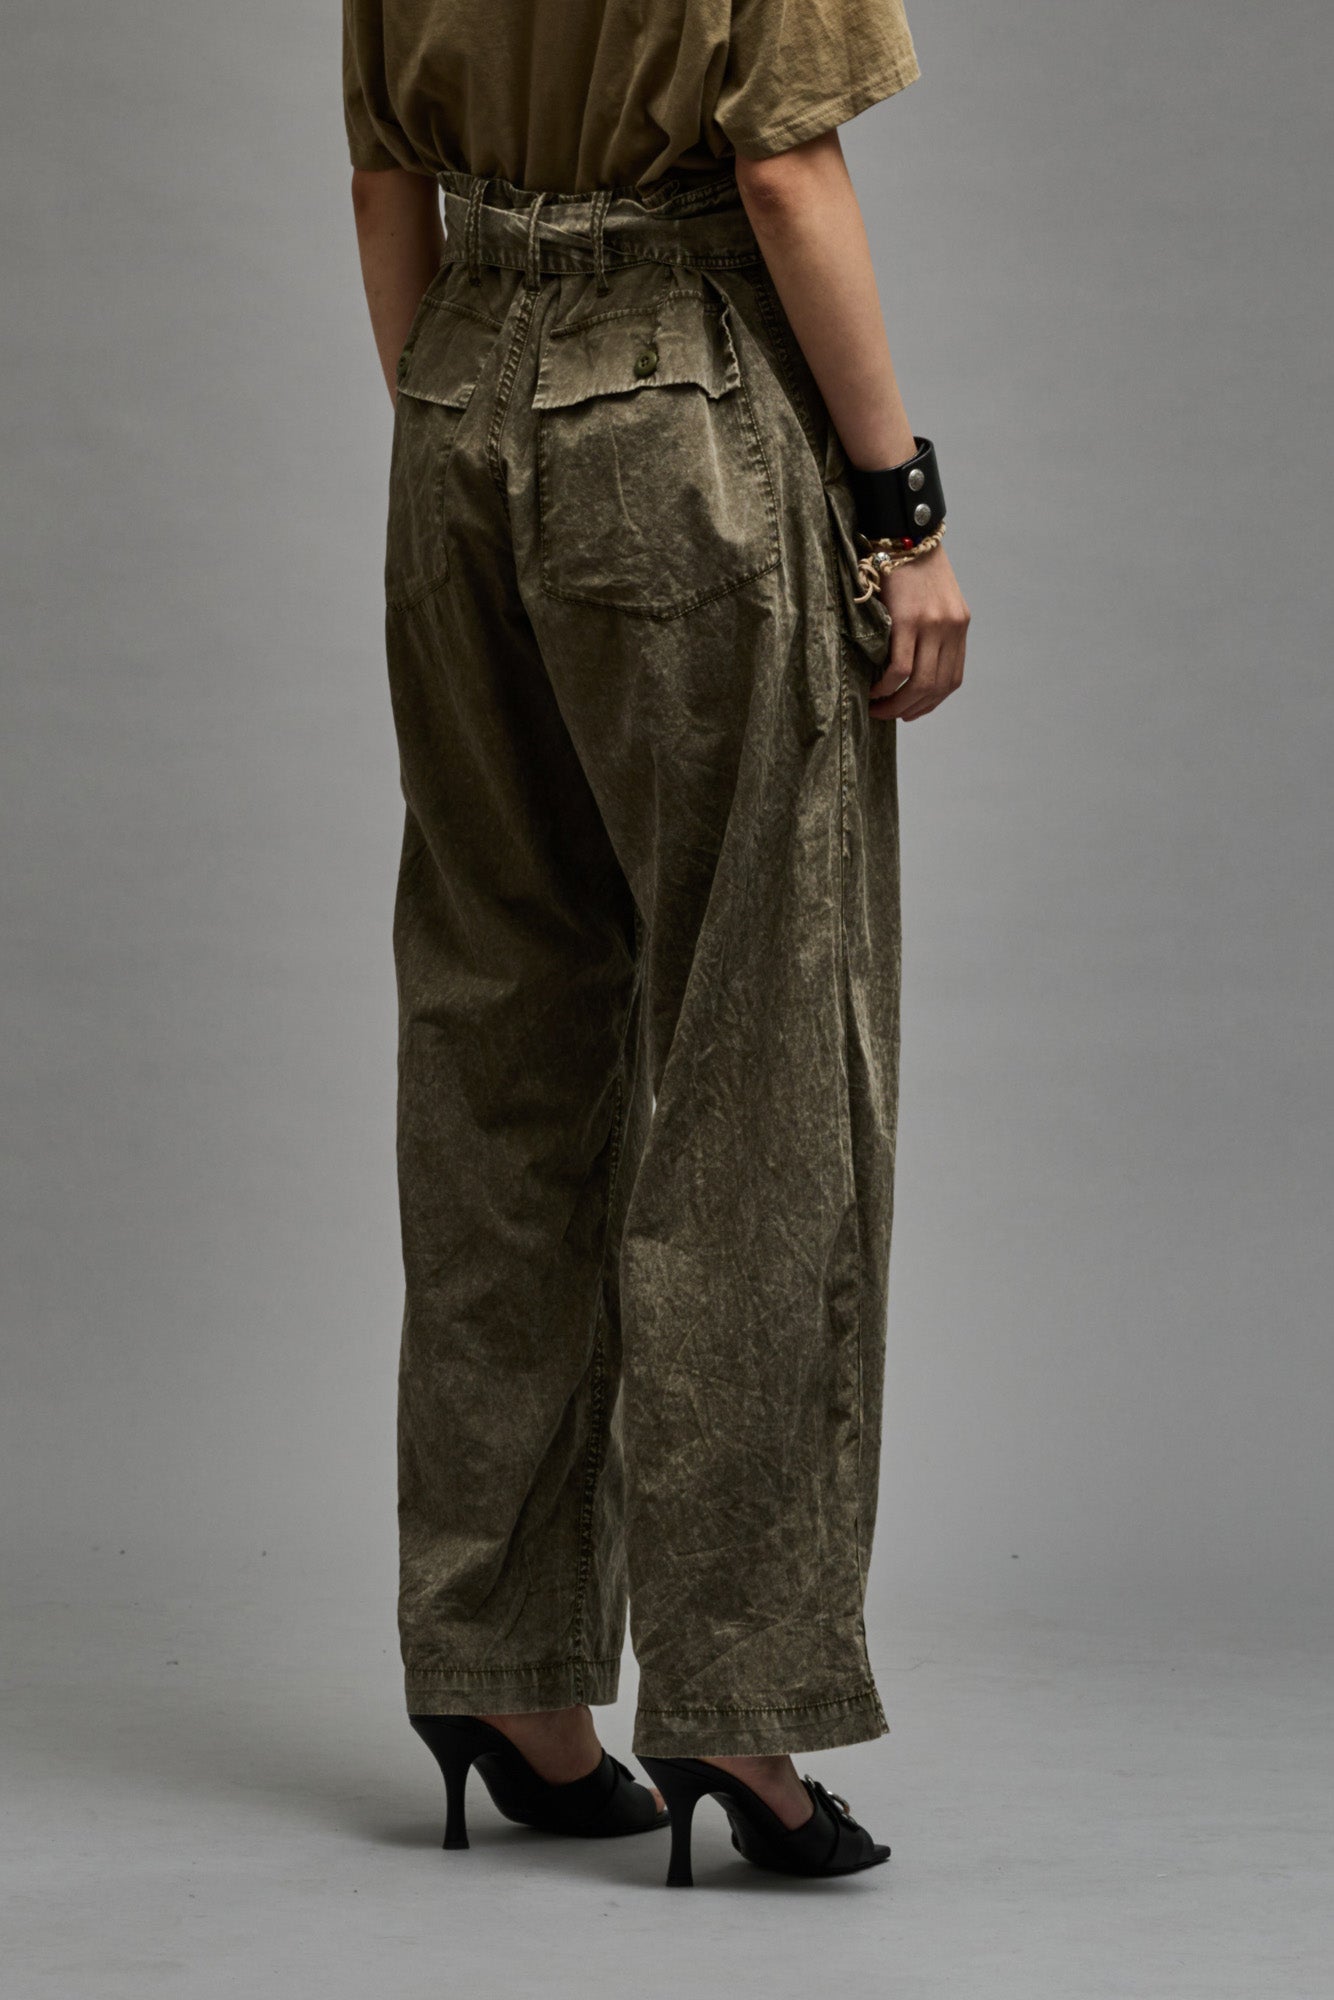 R13 Japanese Fabric Women's Drawstring Cropped Jogger Sweatpants Green -  Shop Linda's Stuff